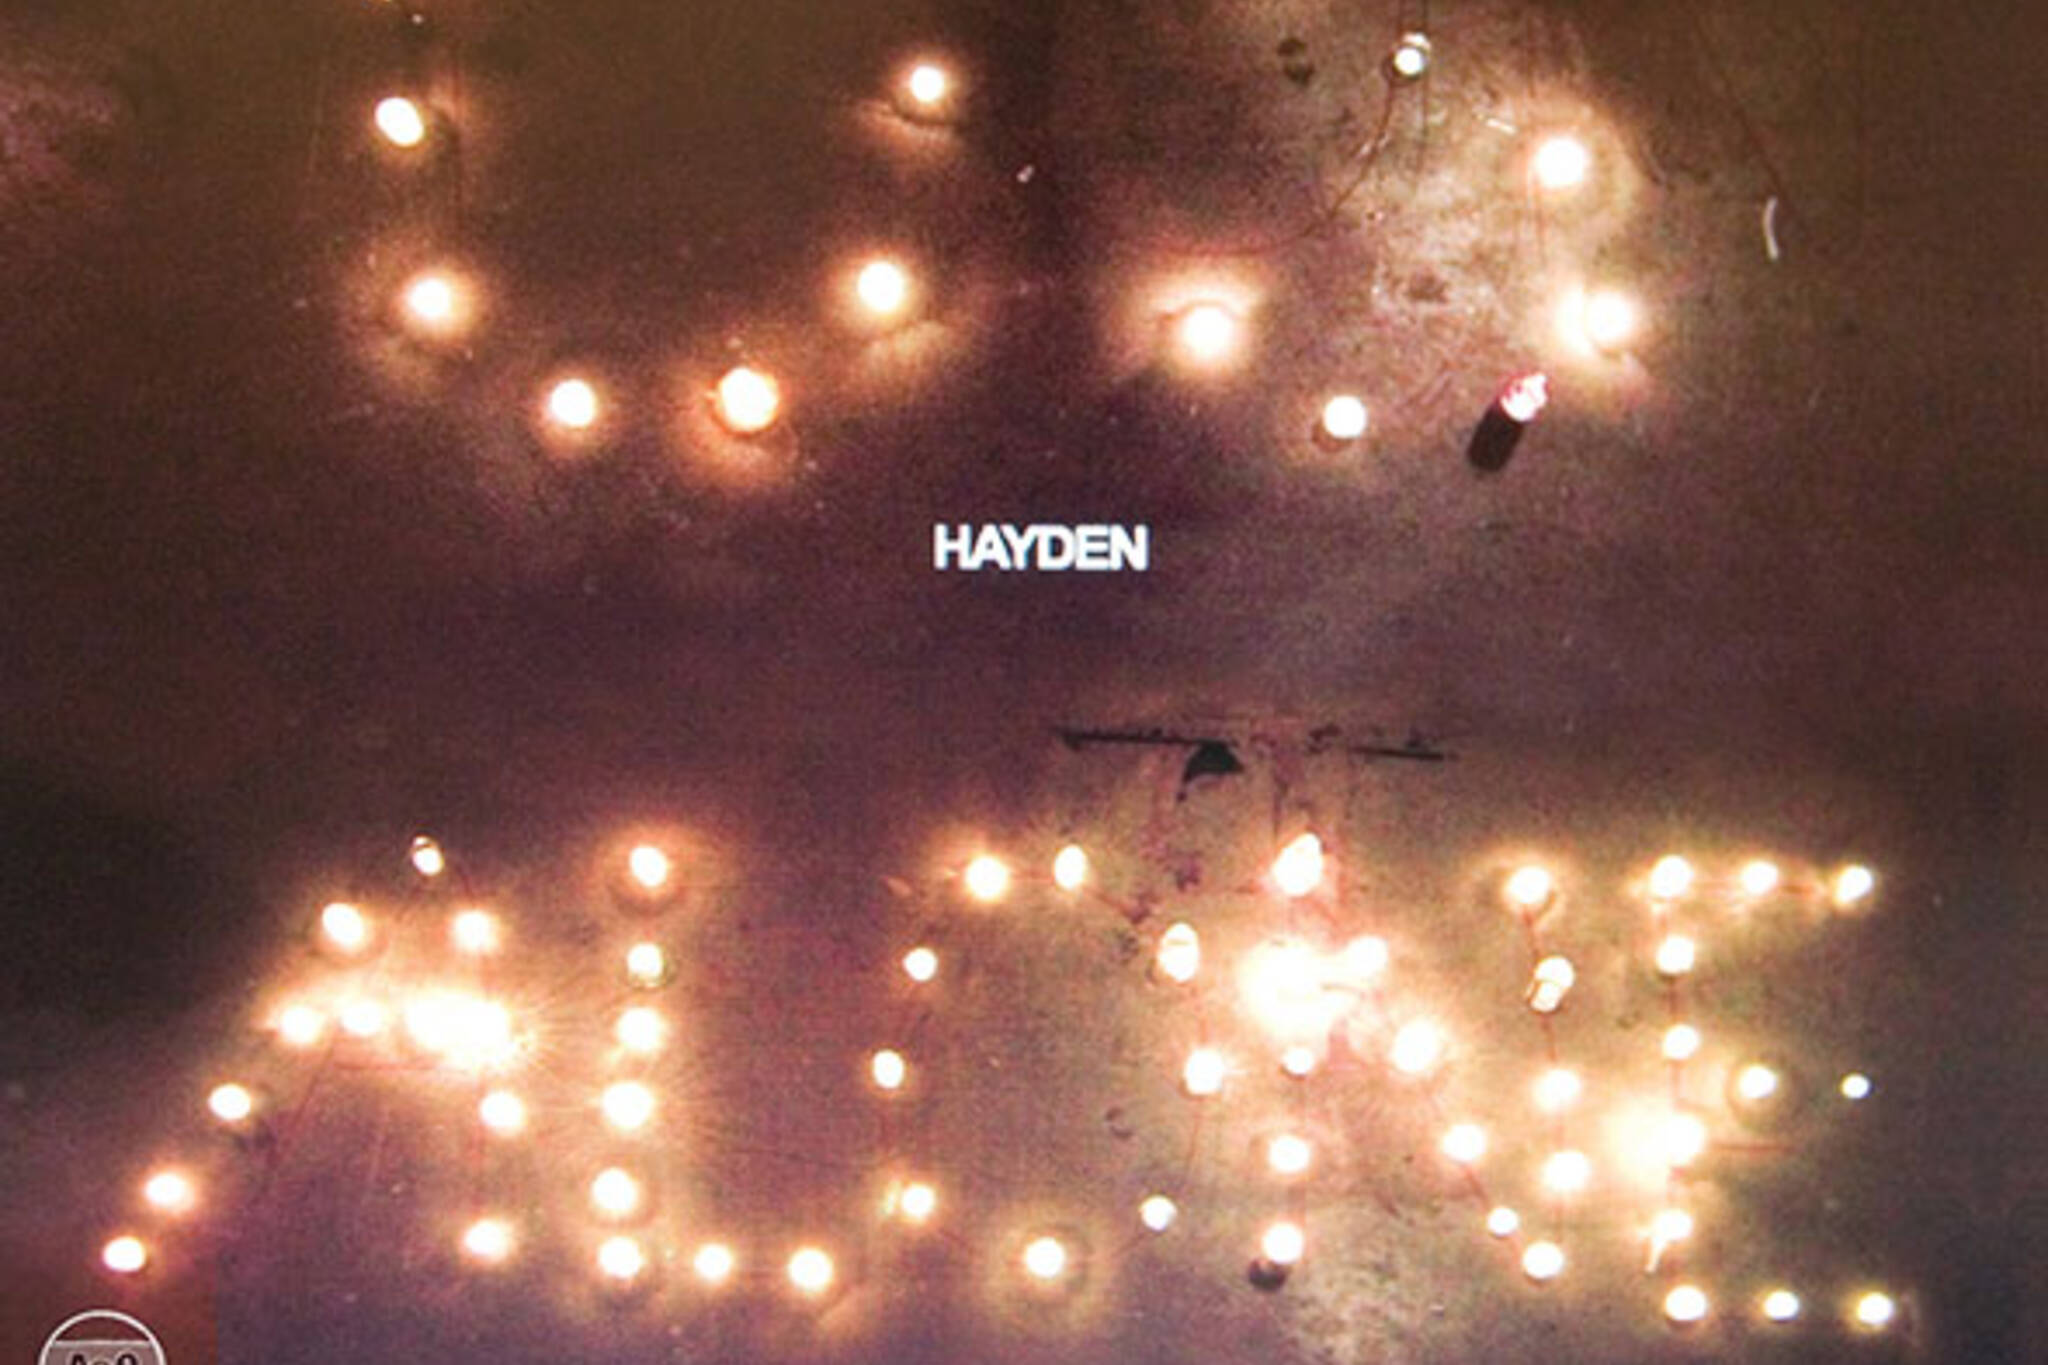 hayden us alone album